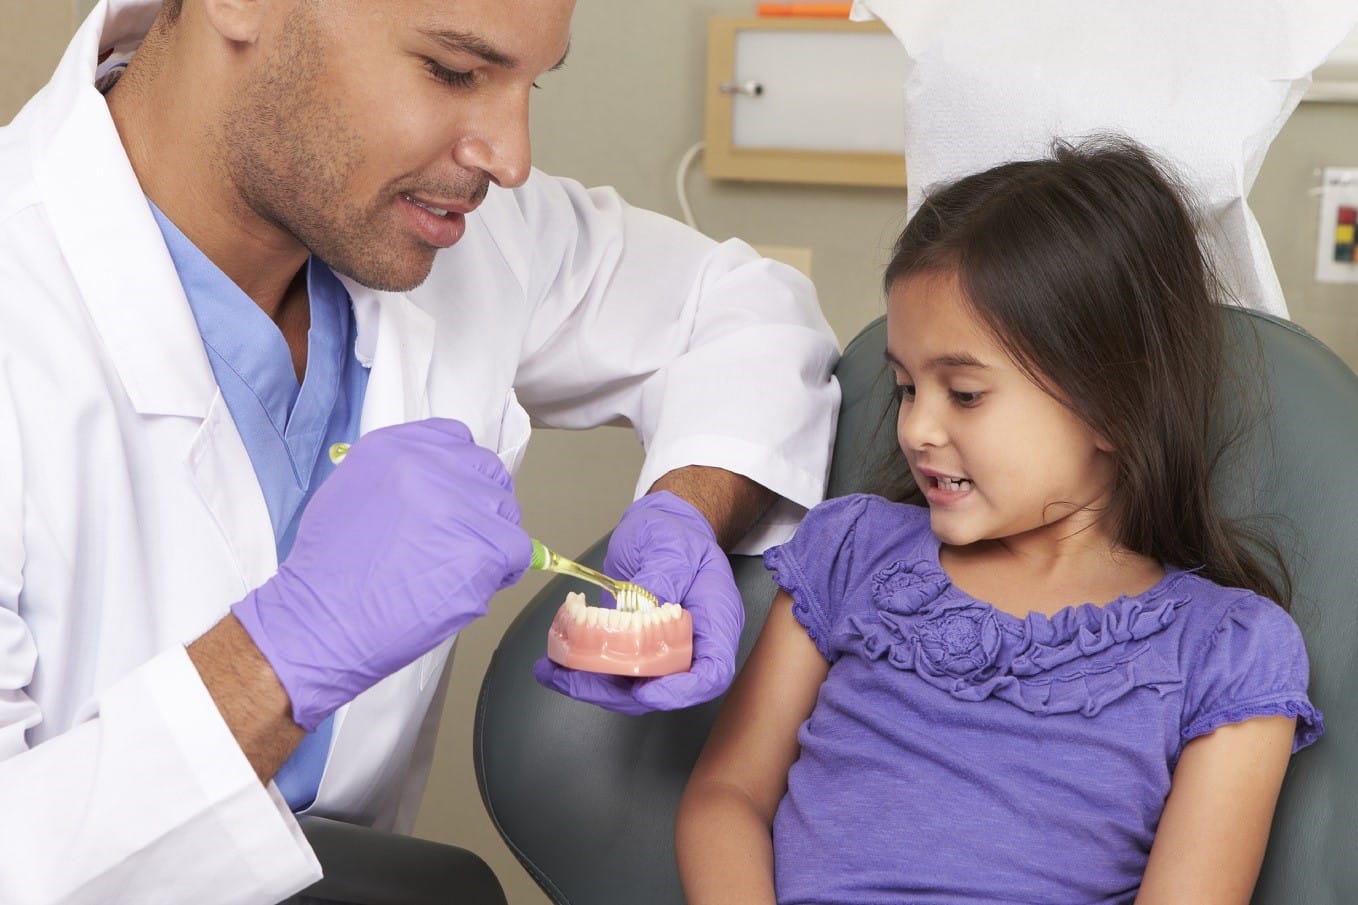 Delta Dental of Illinois Foundation Announces $2 Million Donation to Improve Children's Oral Health